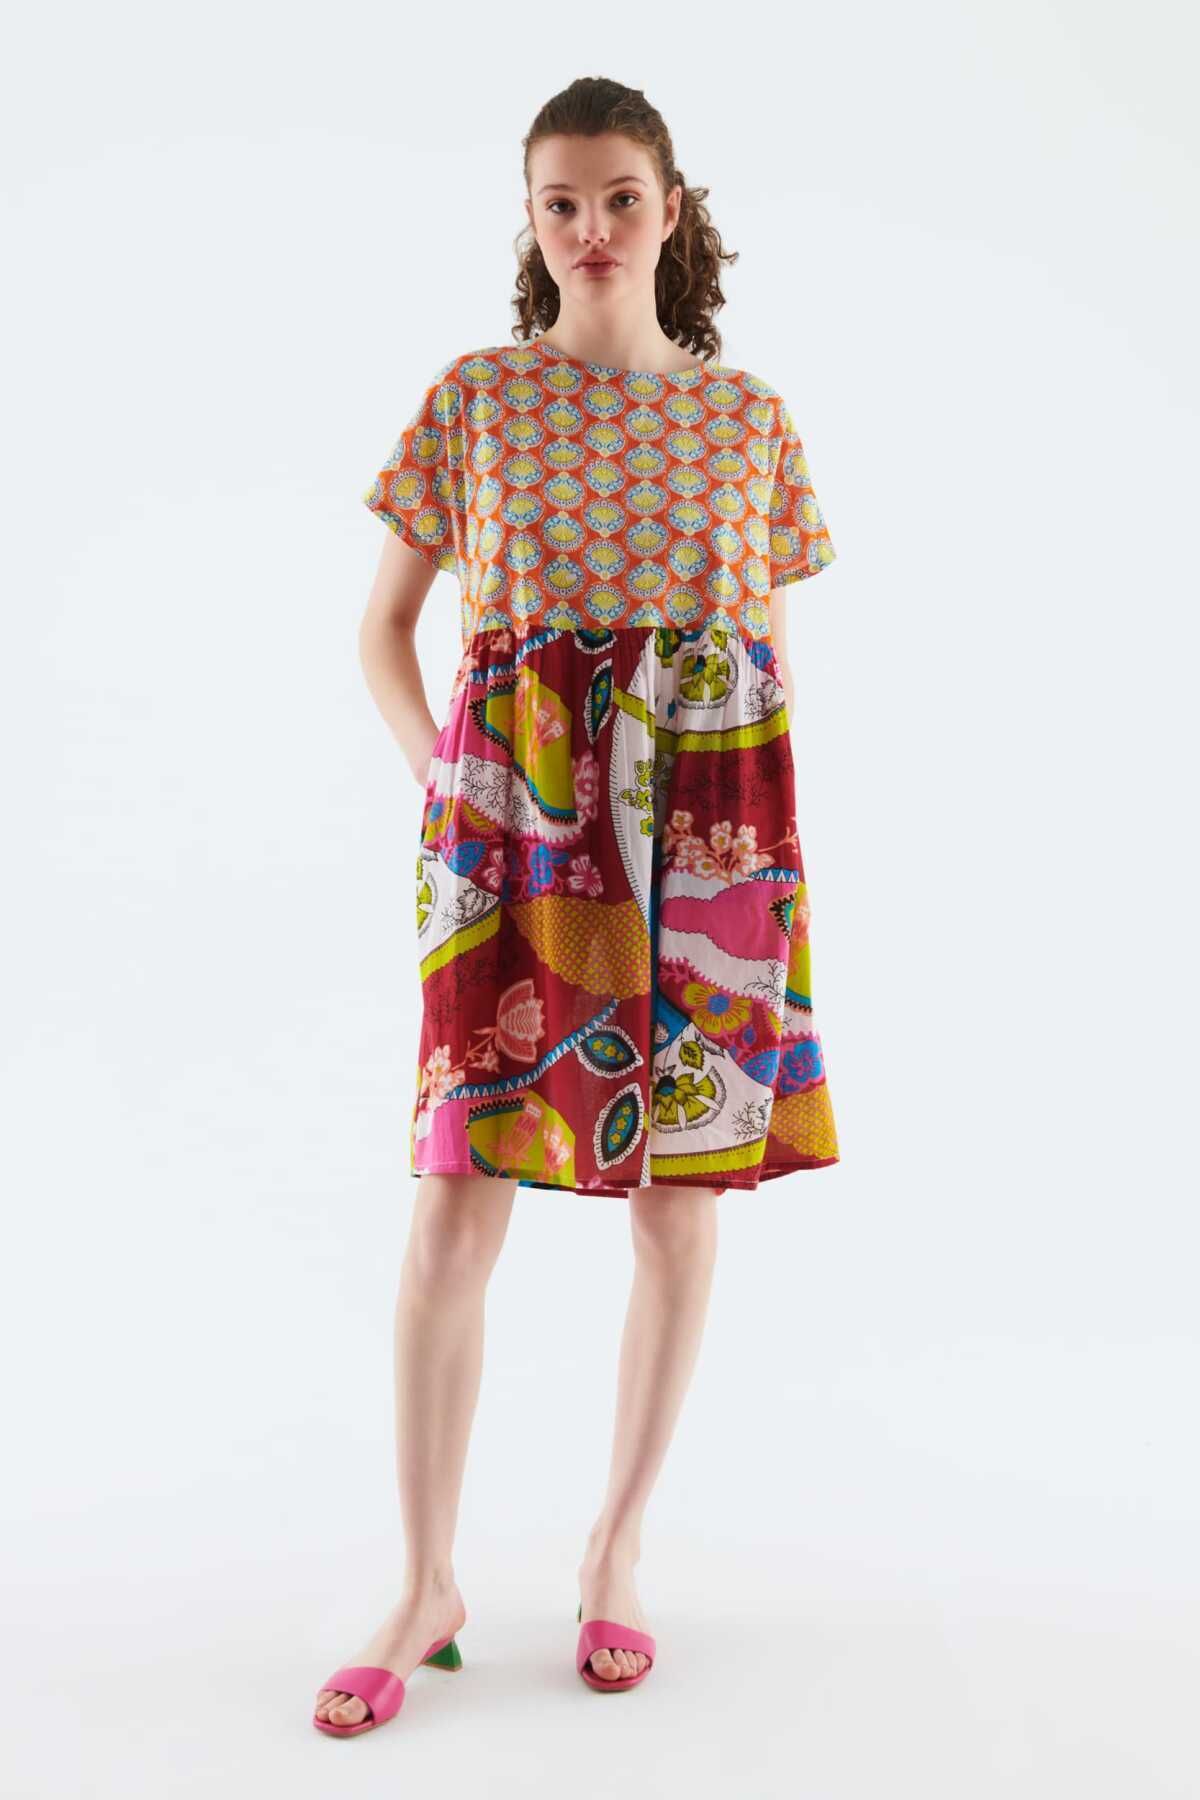 Roman Çok Renkli Desenli Midi Boy Elbise Standart Renk Y2269110_089